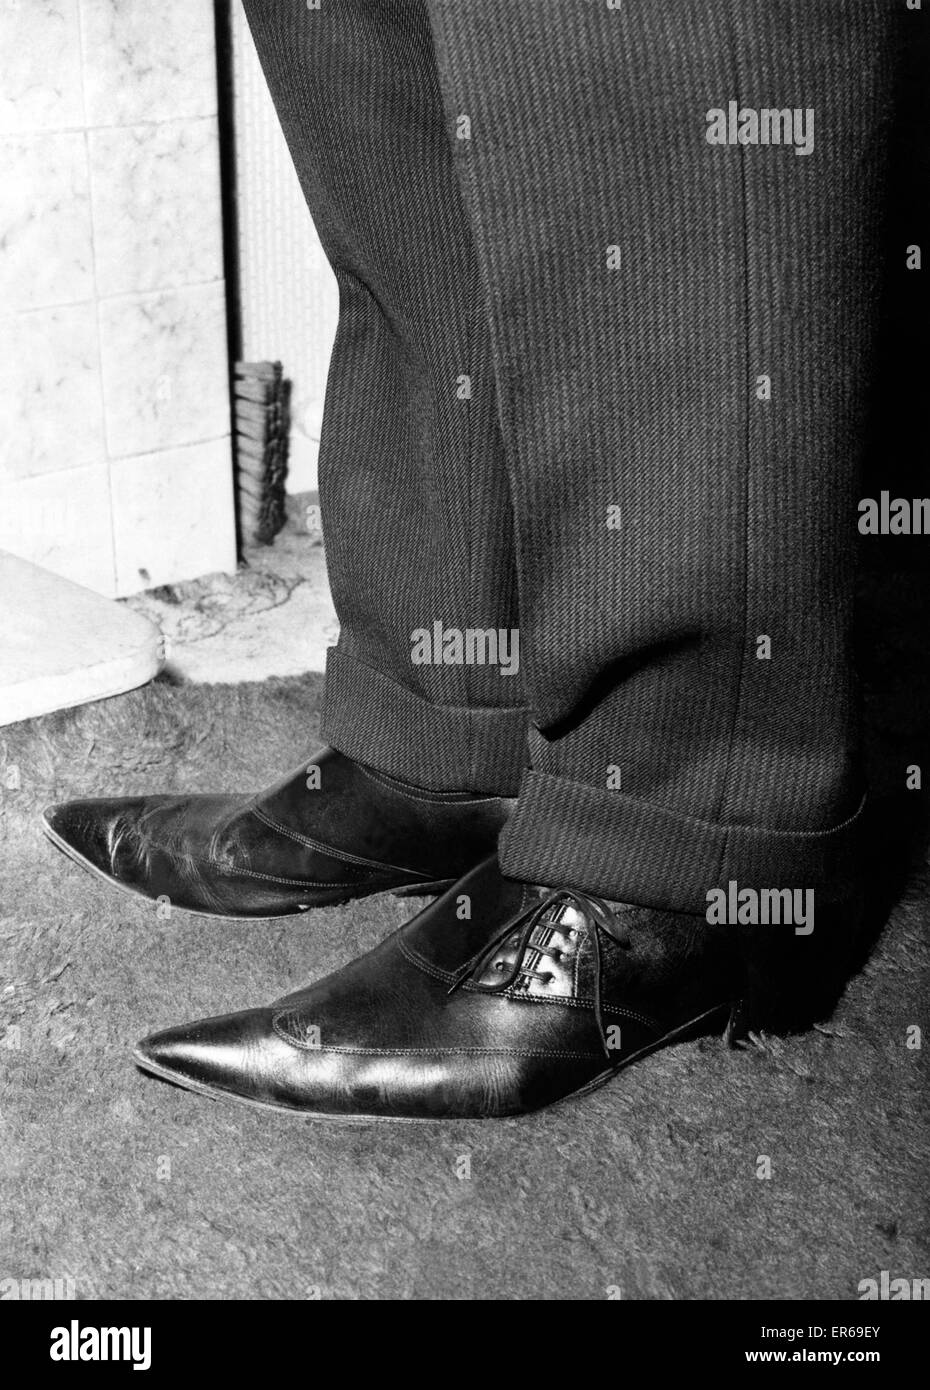 Winklepickers Schuhe, 1960. P025217 Stockfotografie - Alamy